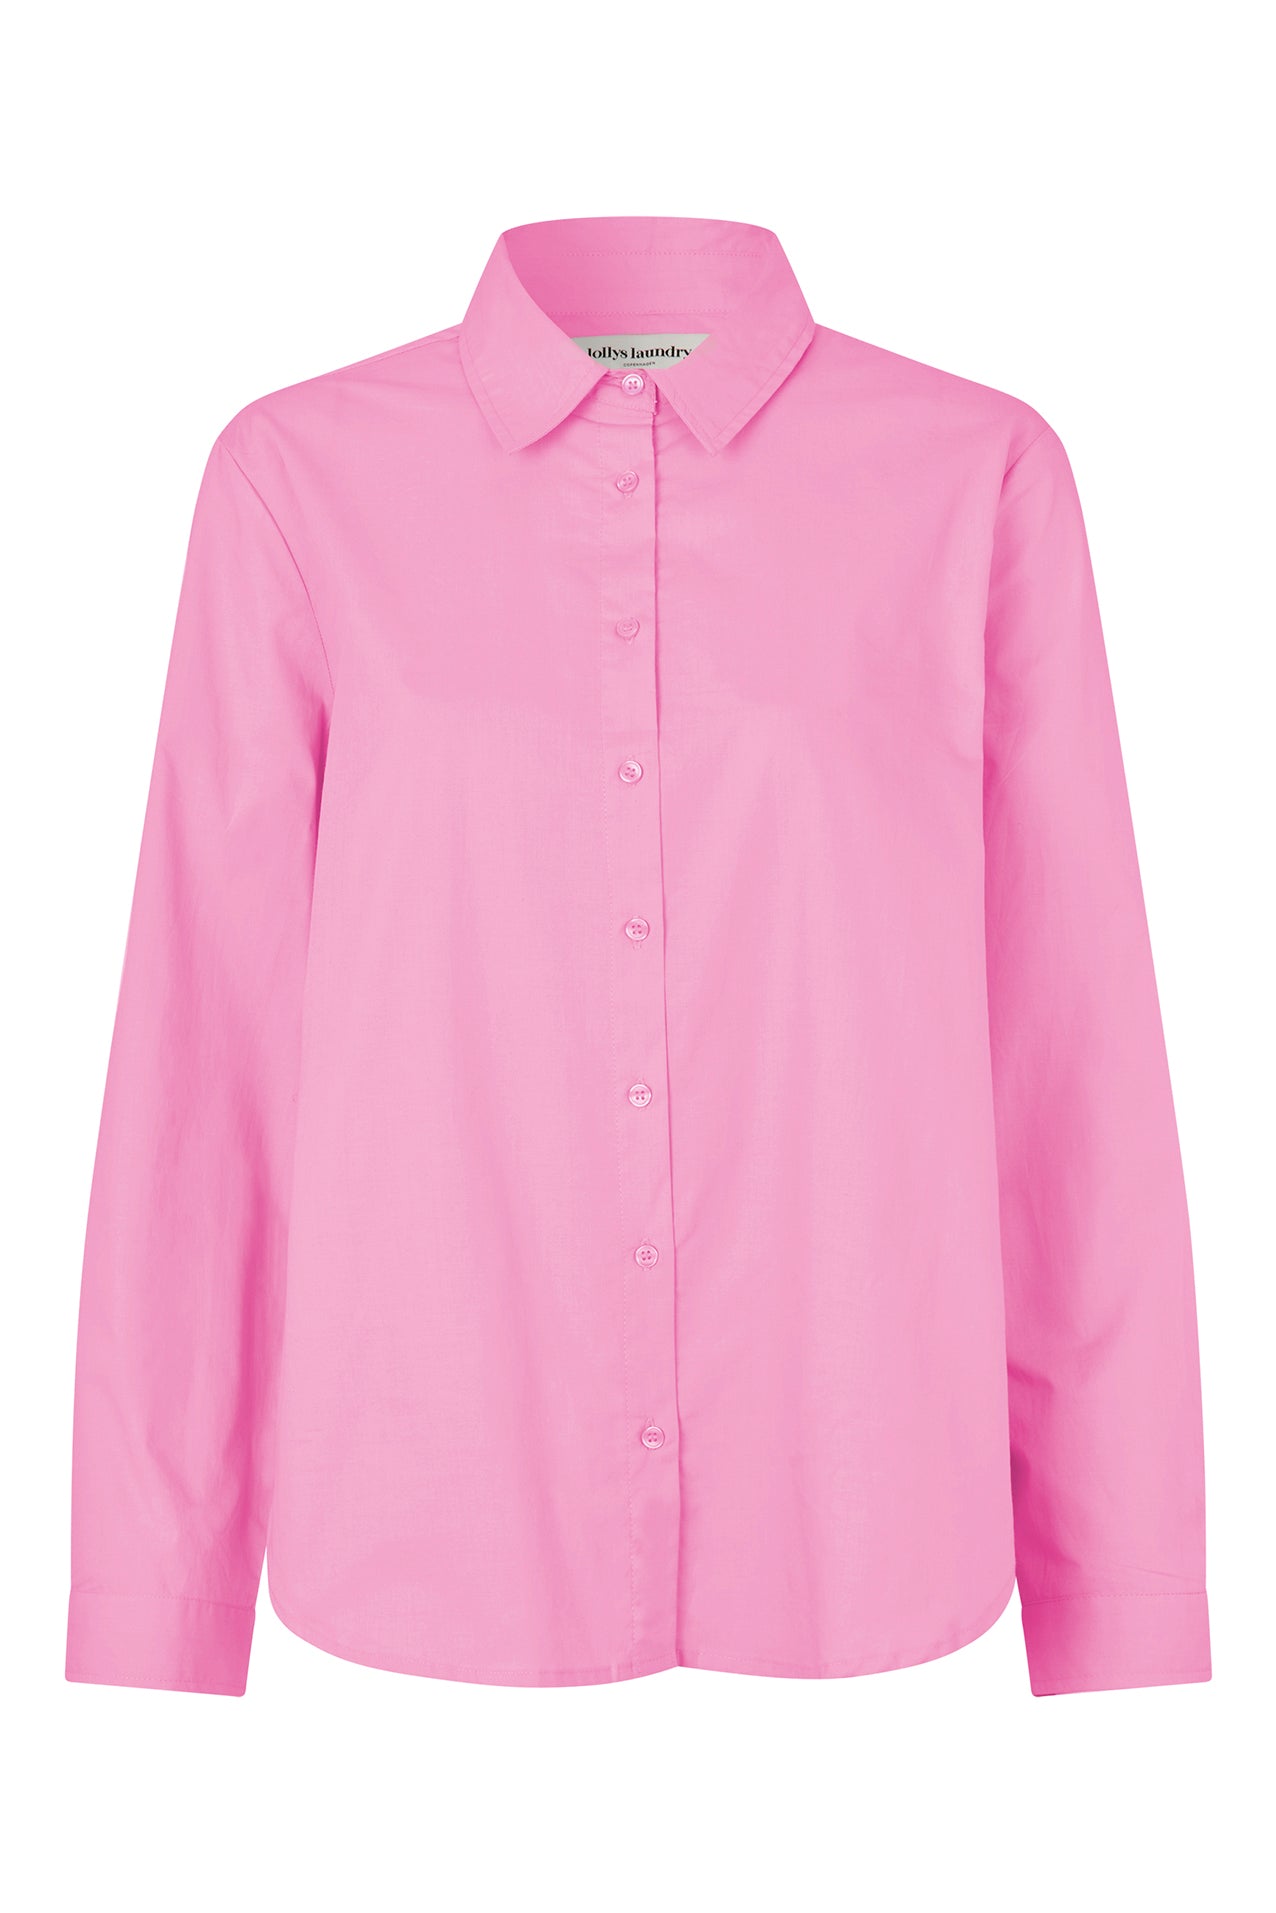 Lollys Laundry JoyceLL Shirt LS Shirt 51 Pink